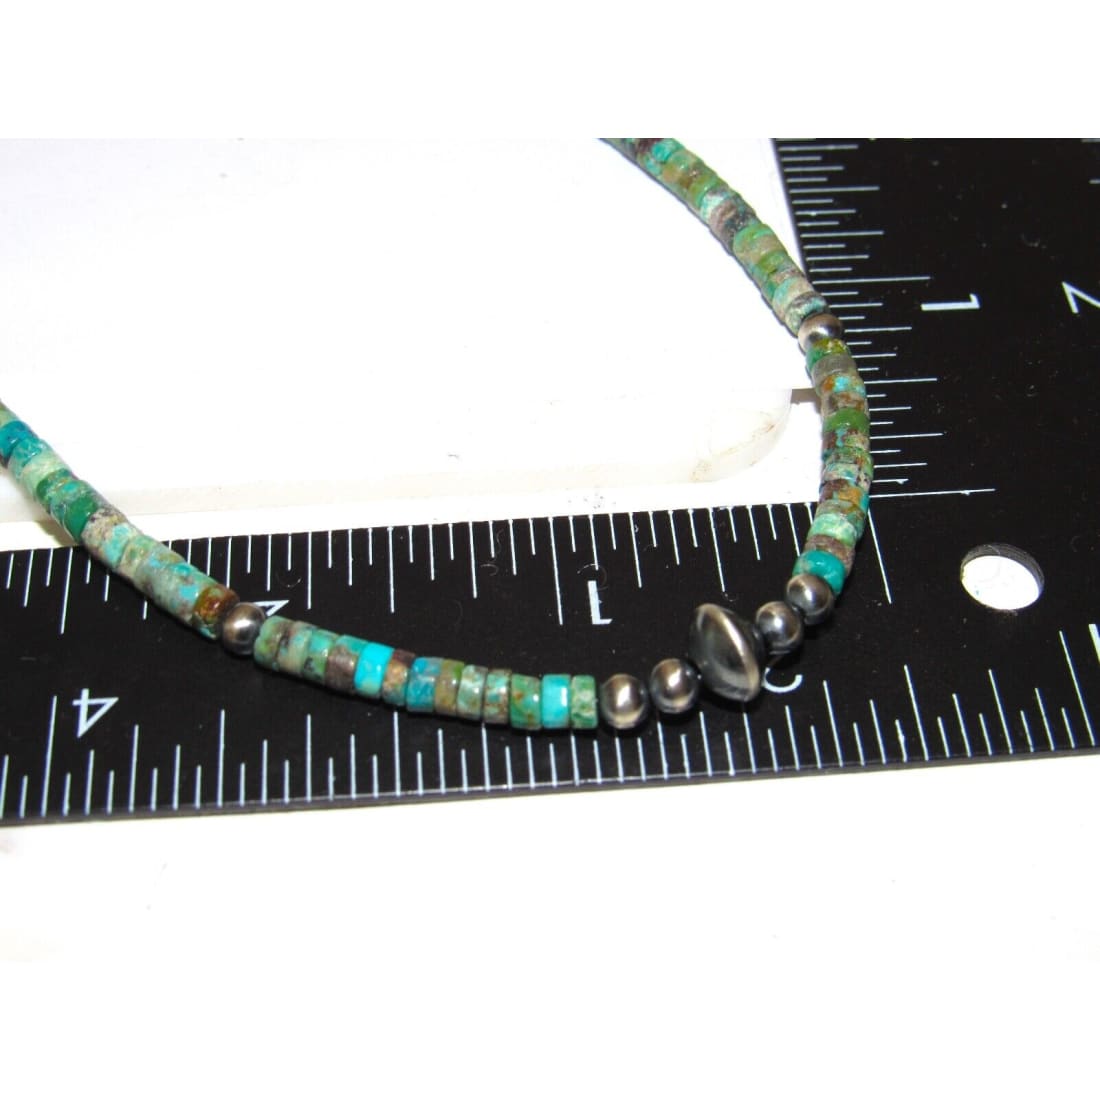 Navajo Rolled Turquoise & Navajo Pearls Heishi Choker